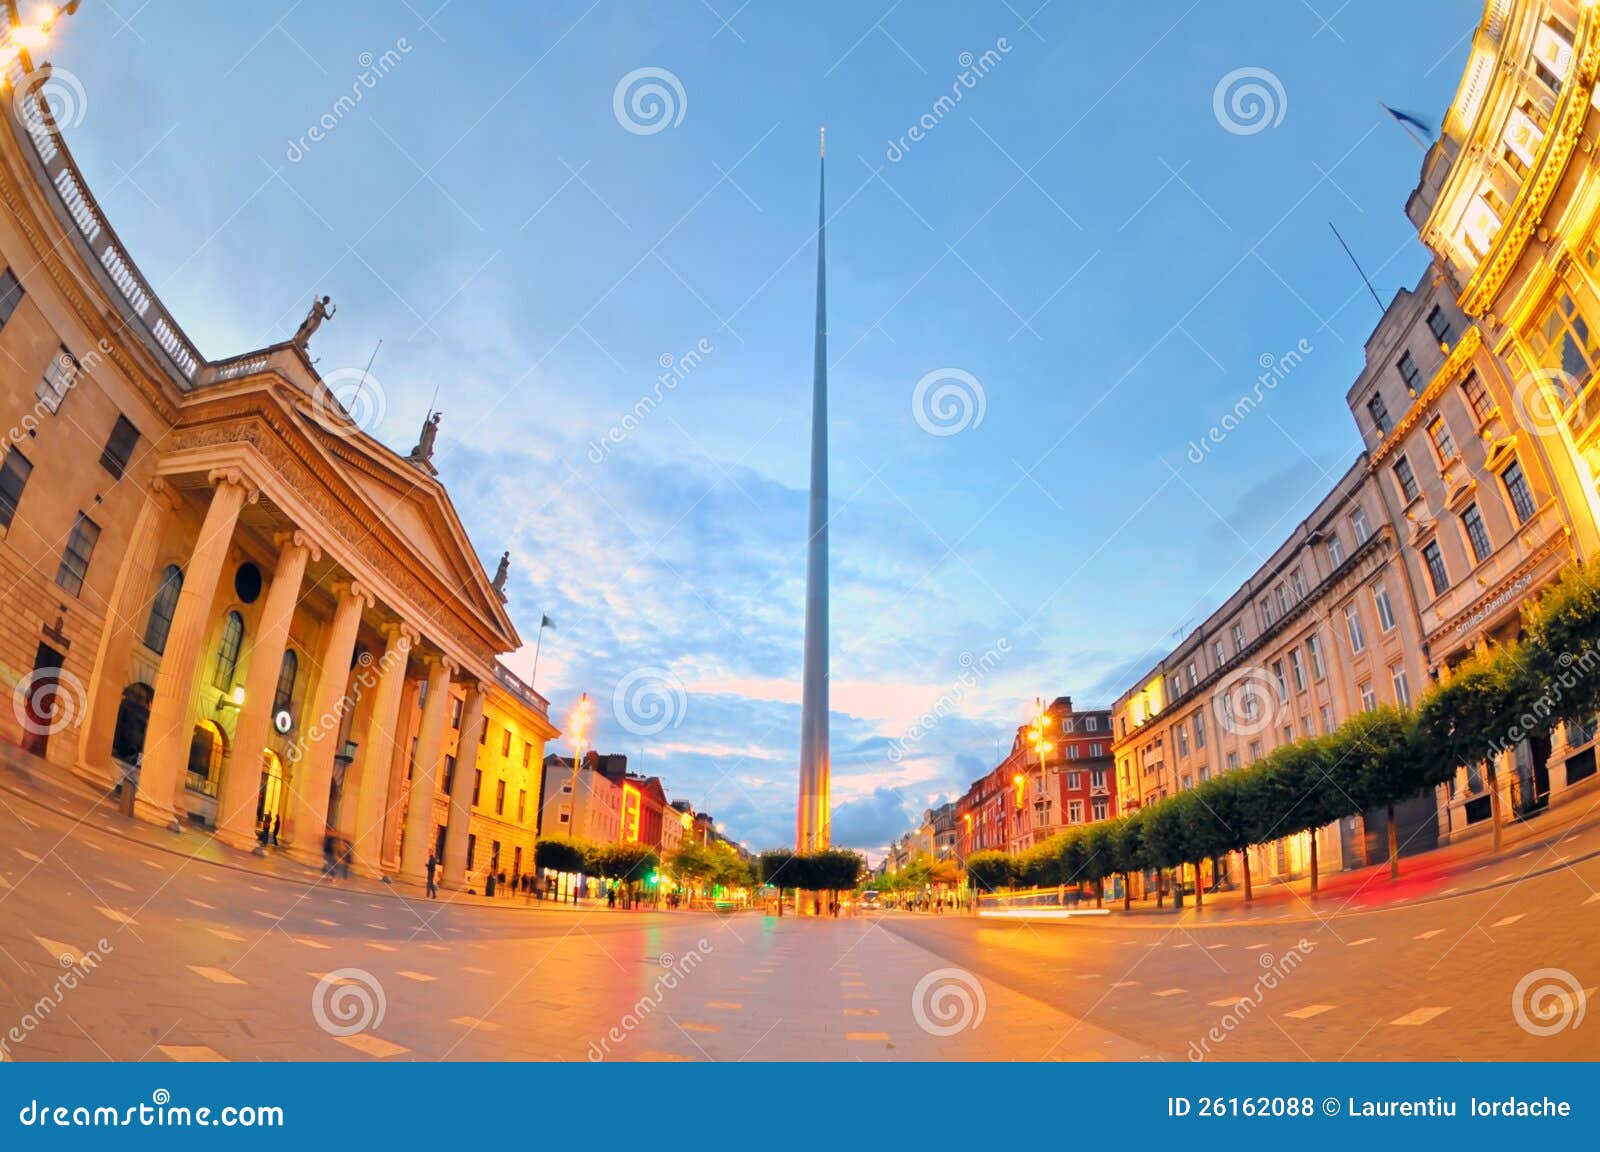 the historic spire of dublin